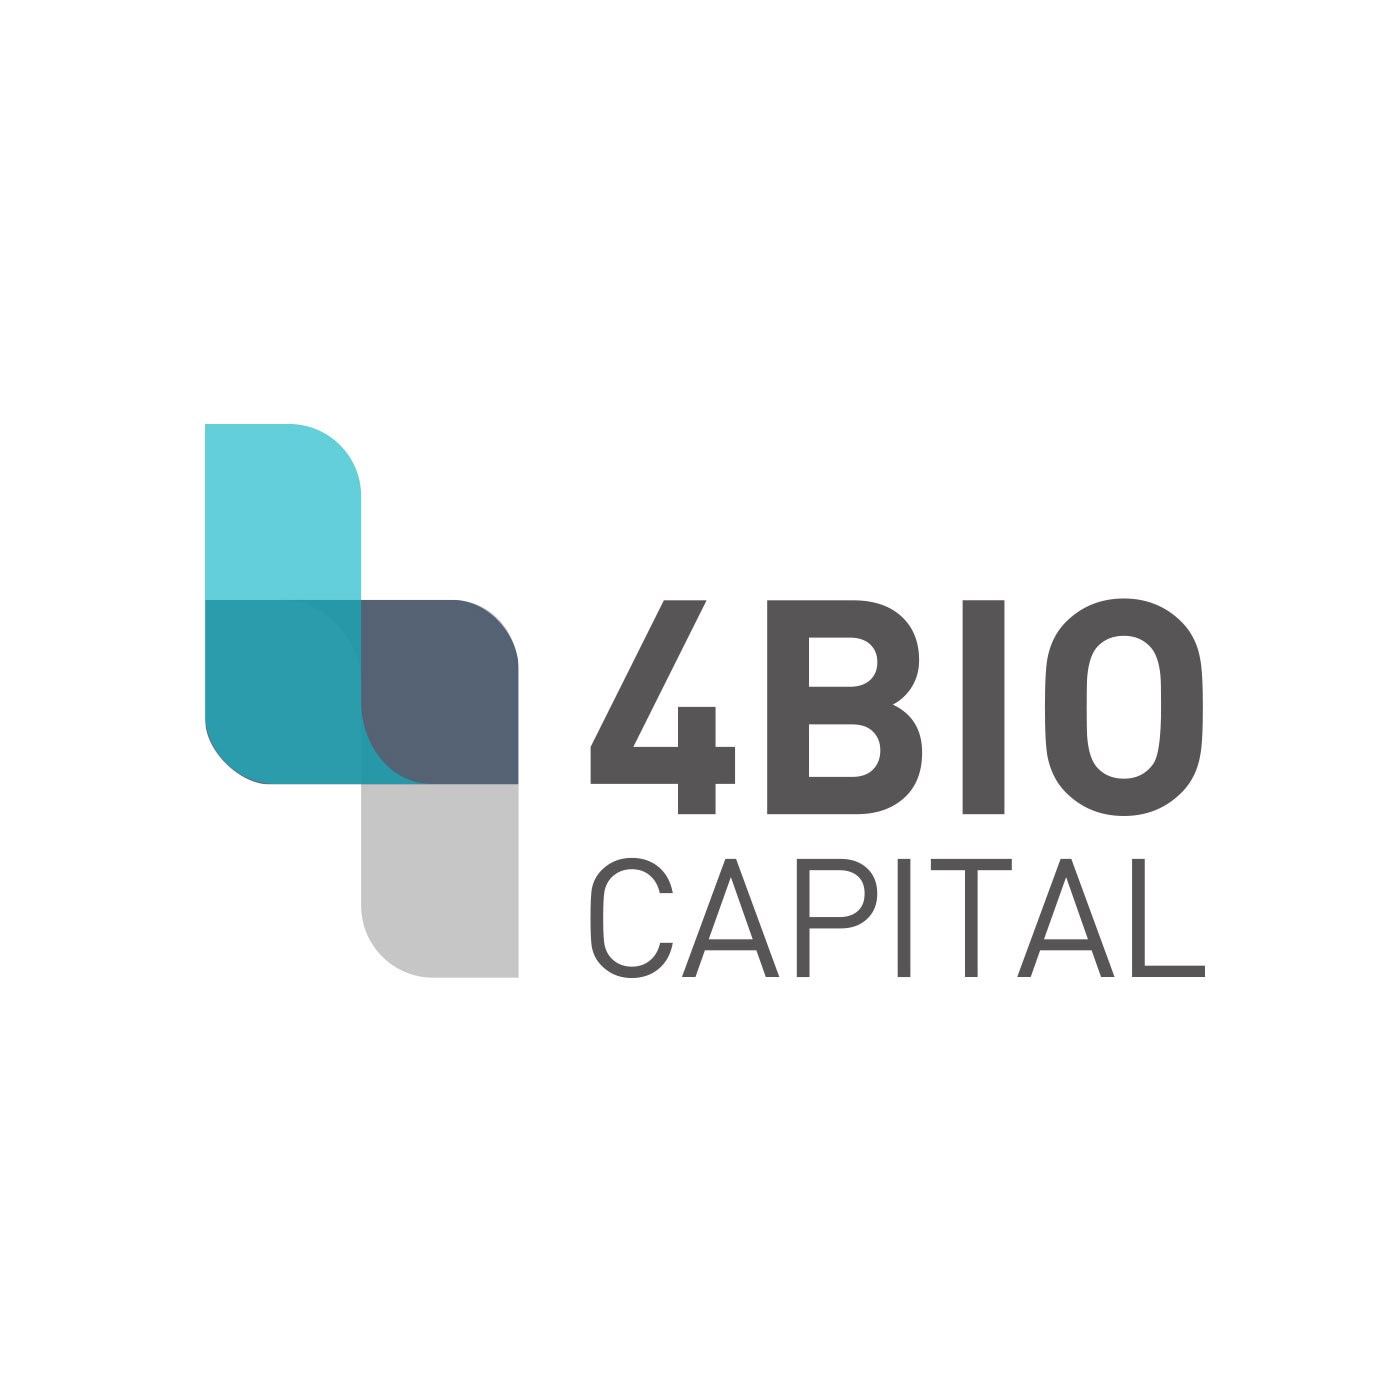 4BIO Capital Partners